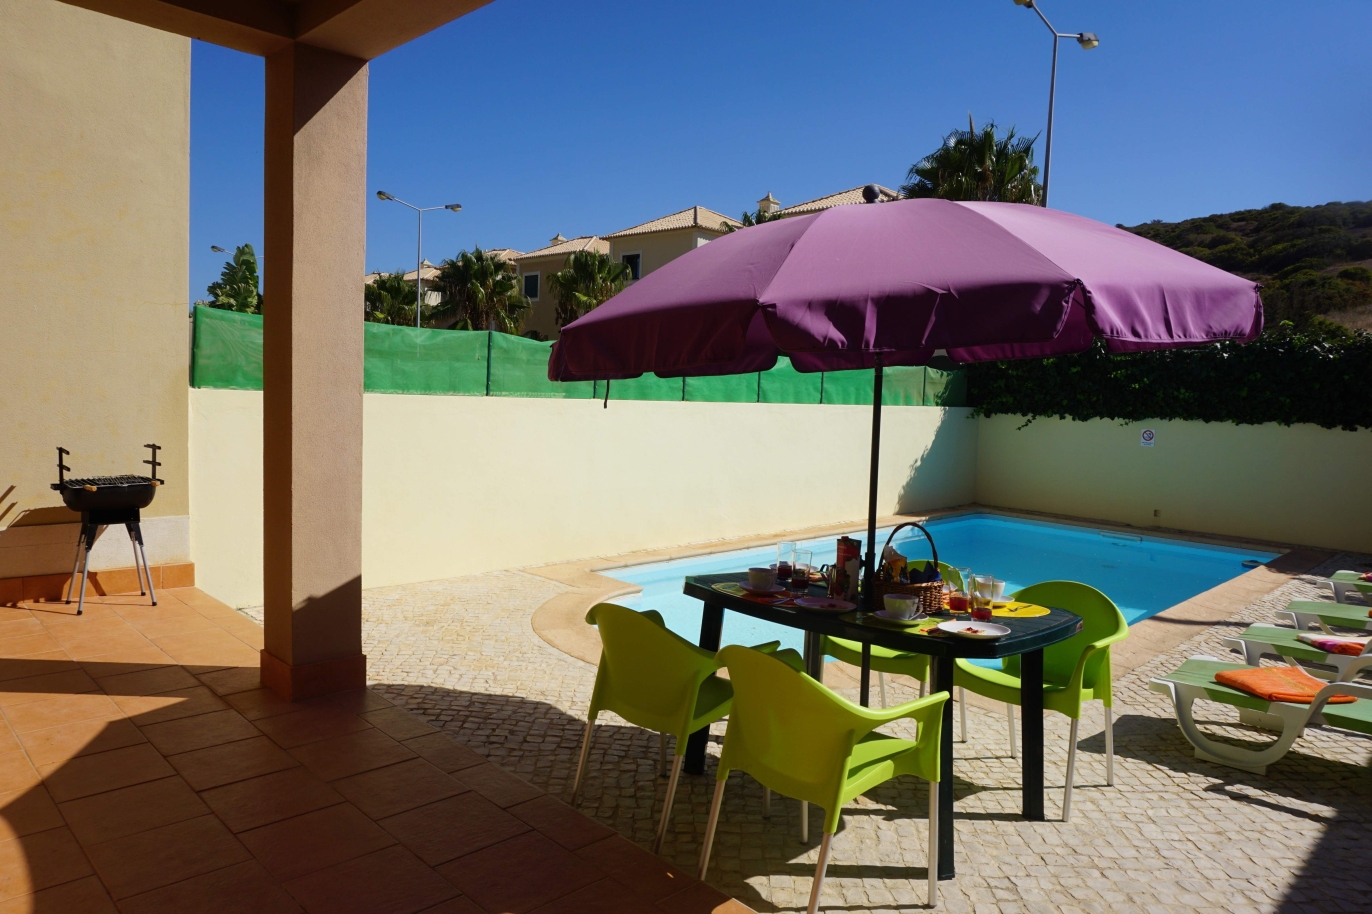 Venda de moradia com piscina em Budens, Vila do Bispo, Algarve_118805